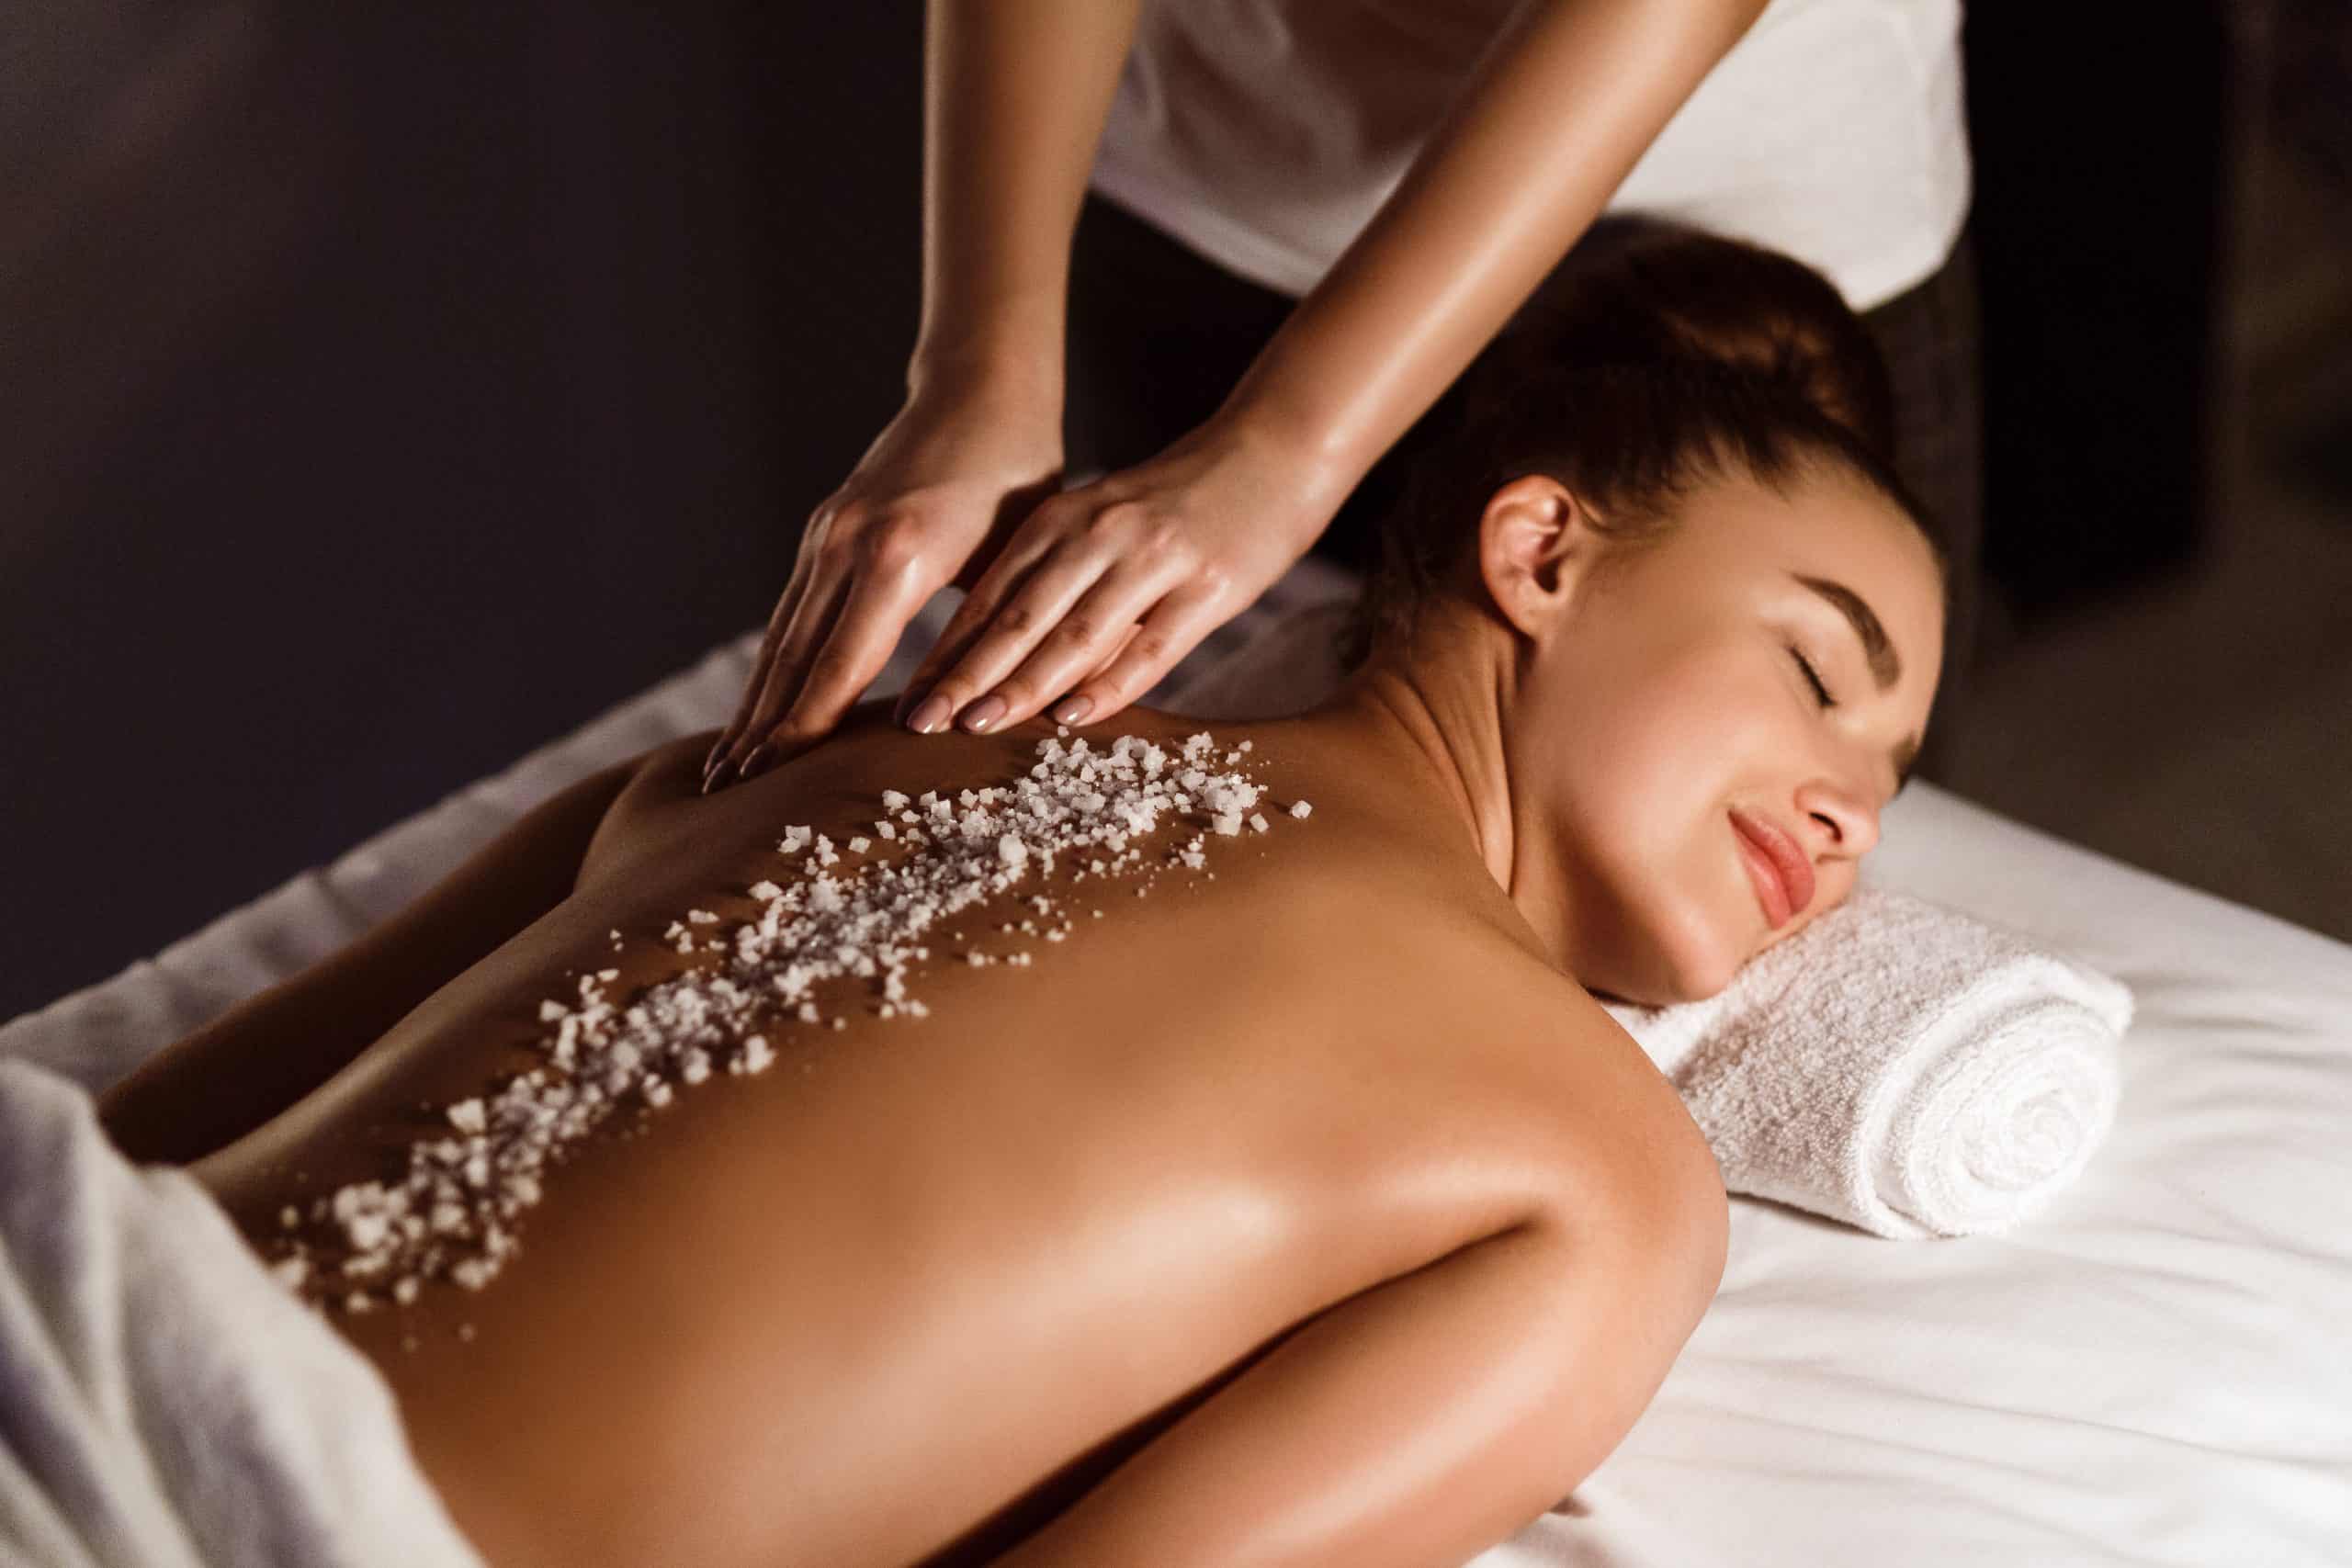 Woman Enjoying Salt Scrub Massage, Relaxing In Health Spa